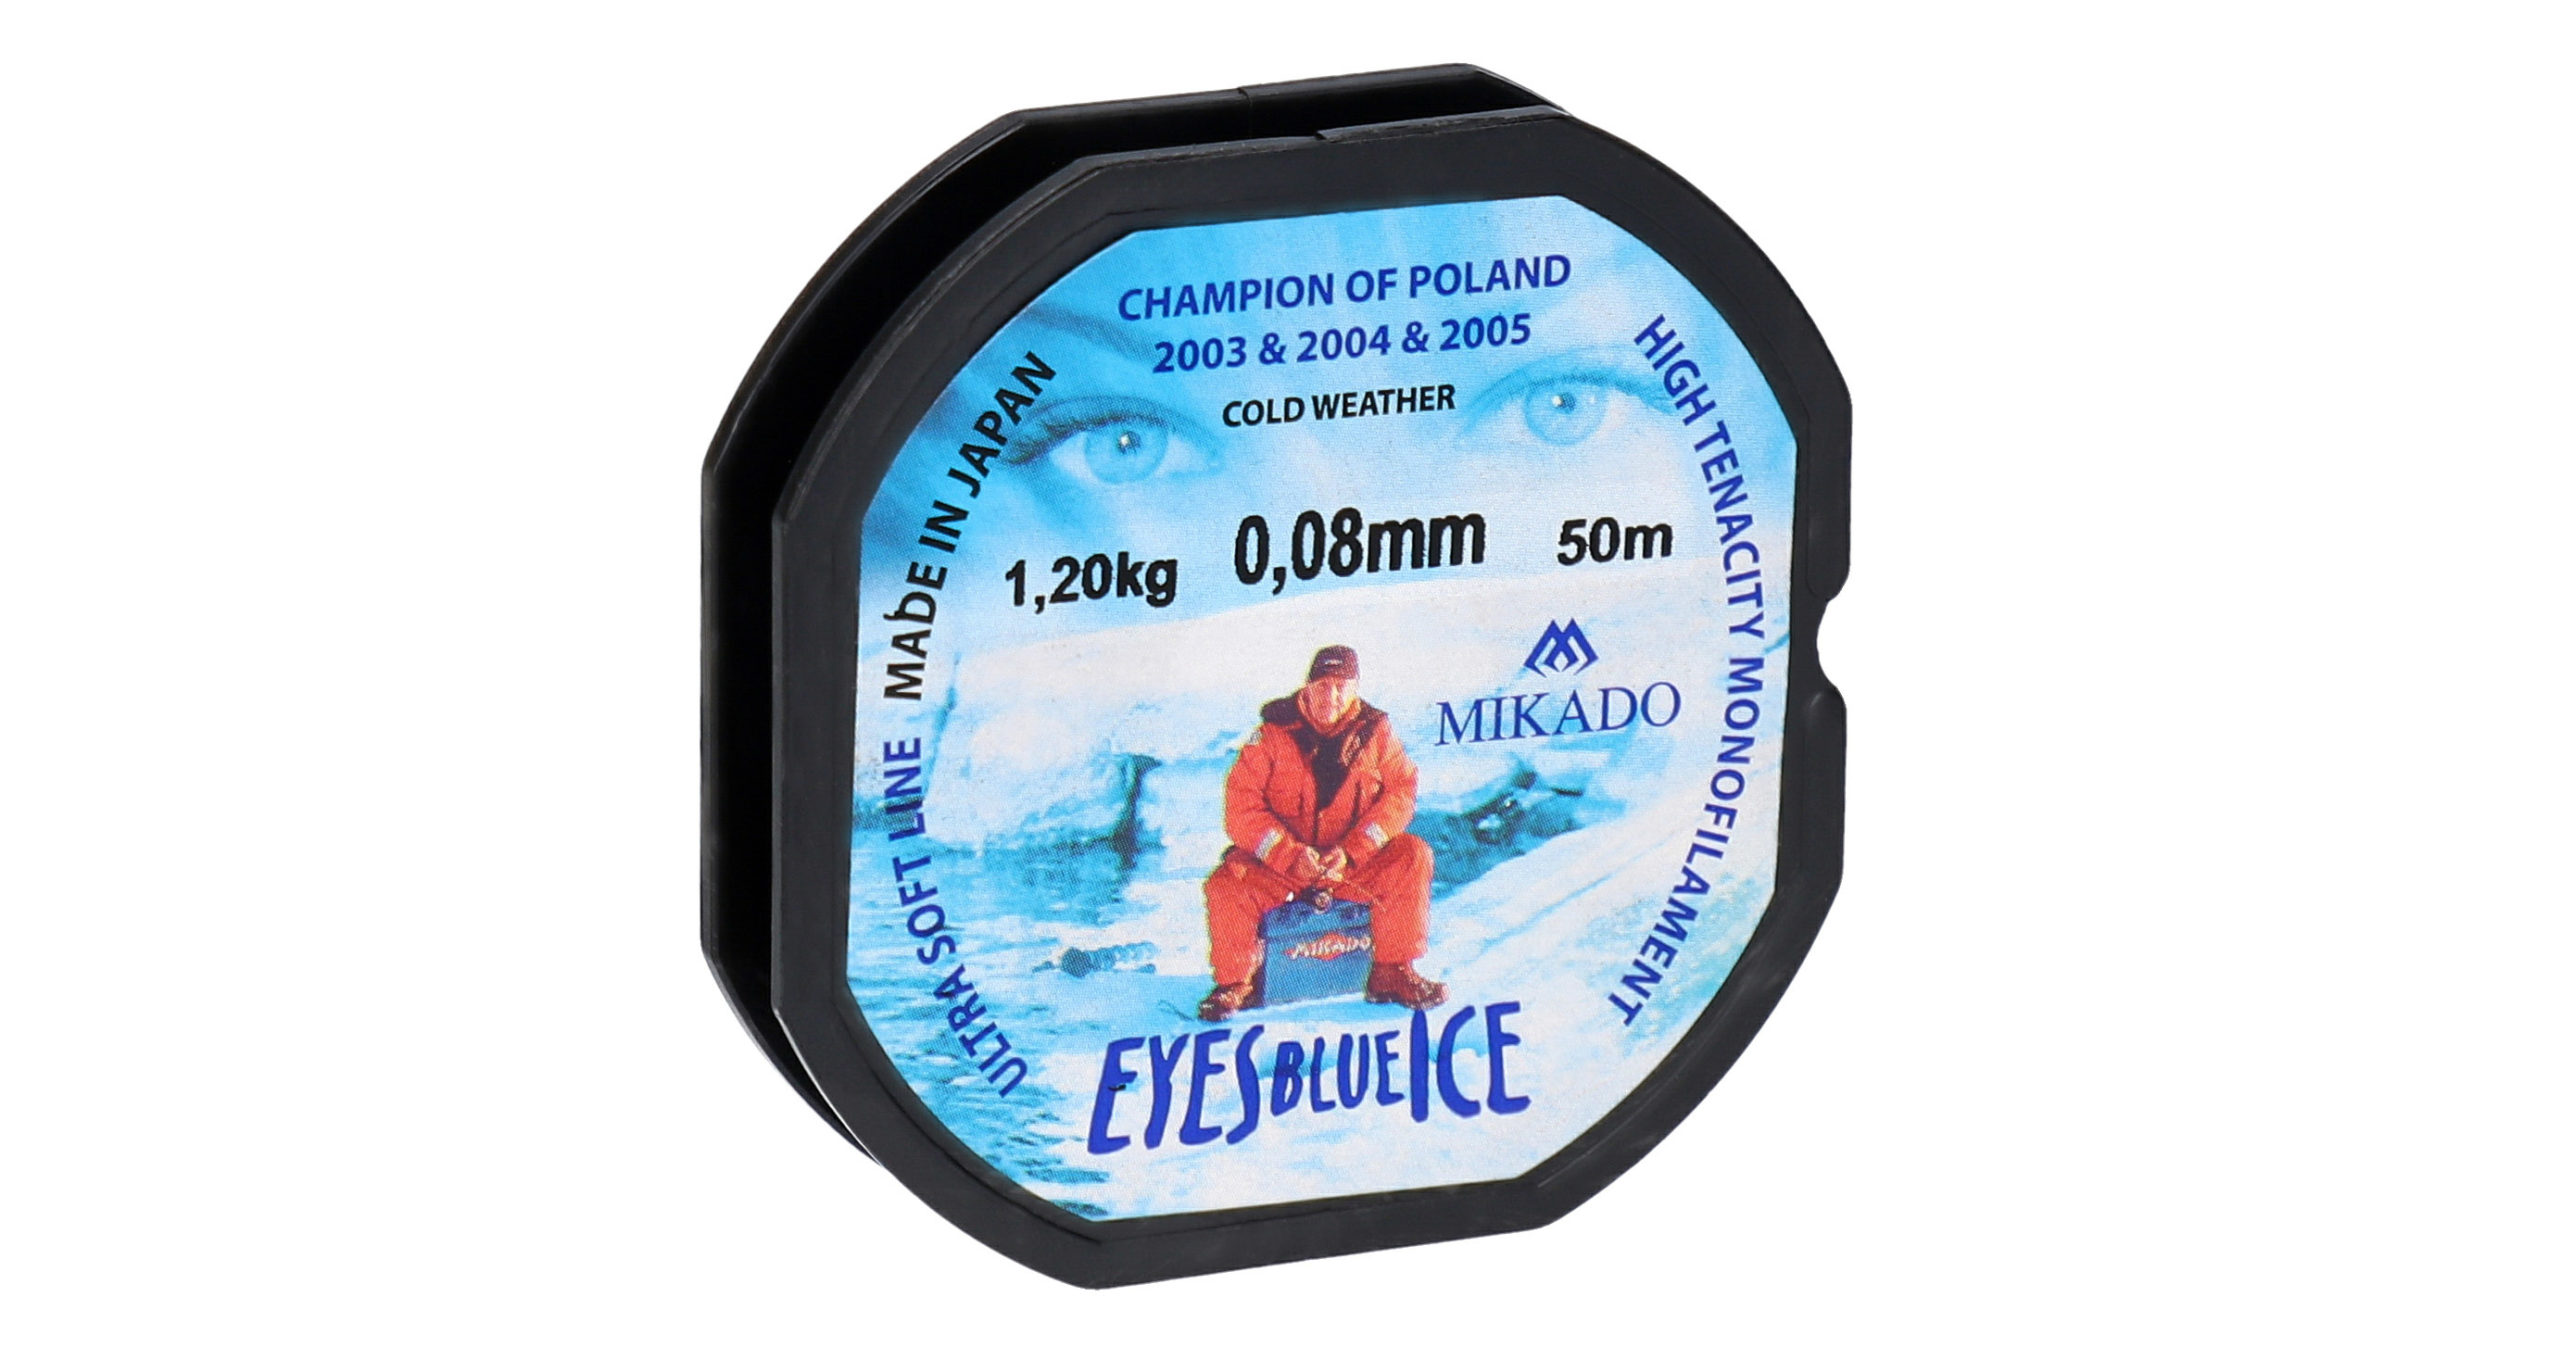 Mikado wędkarstwo - ŻYŁKA - EYES BLUE ICE - 0.14mm/2.90kg/50m - op.10szp.